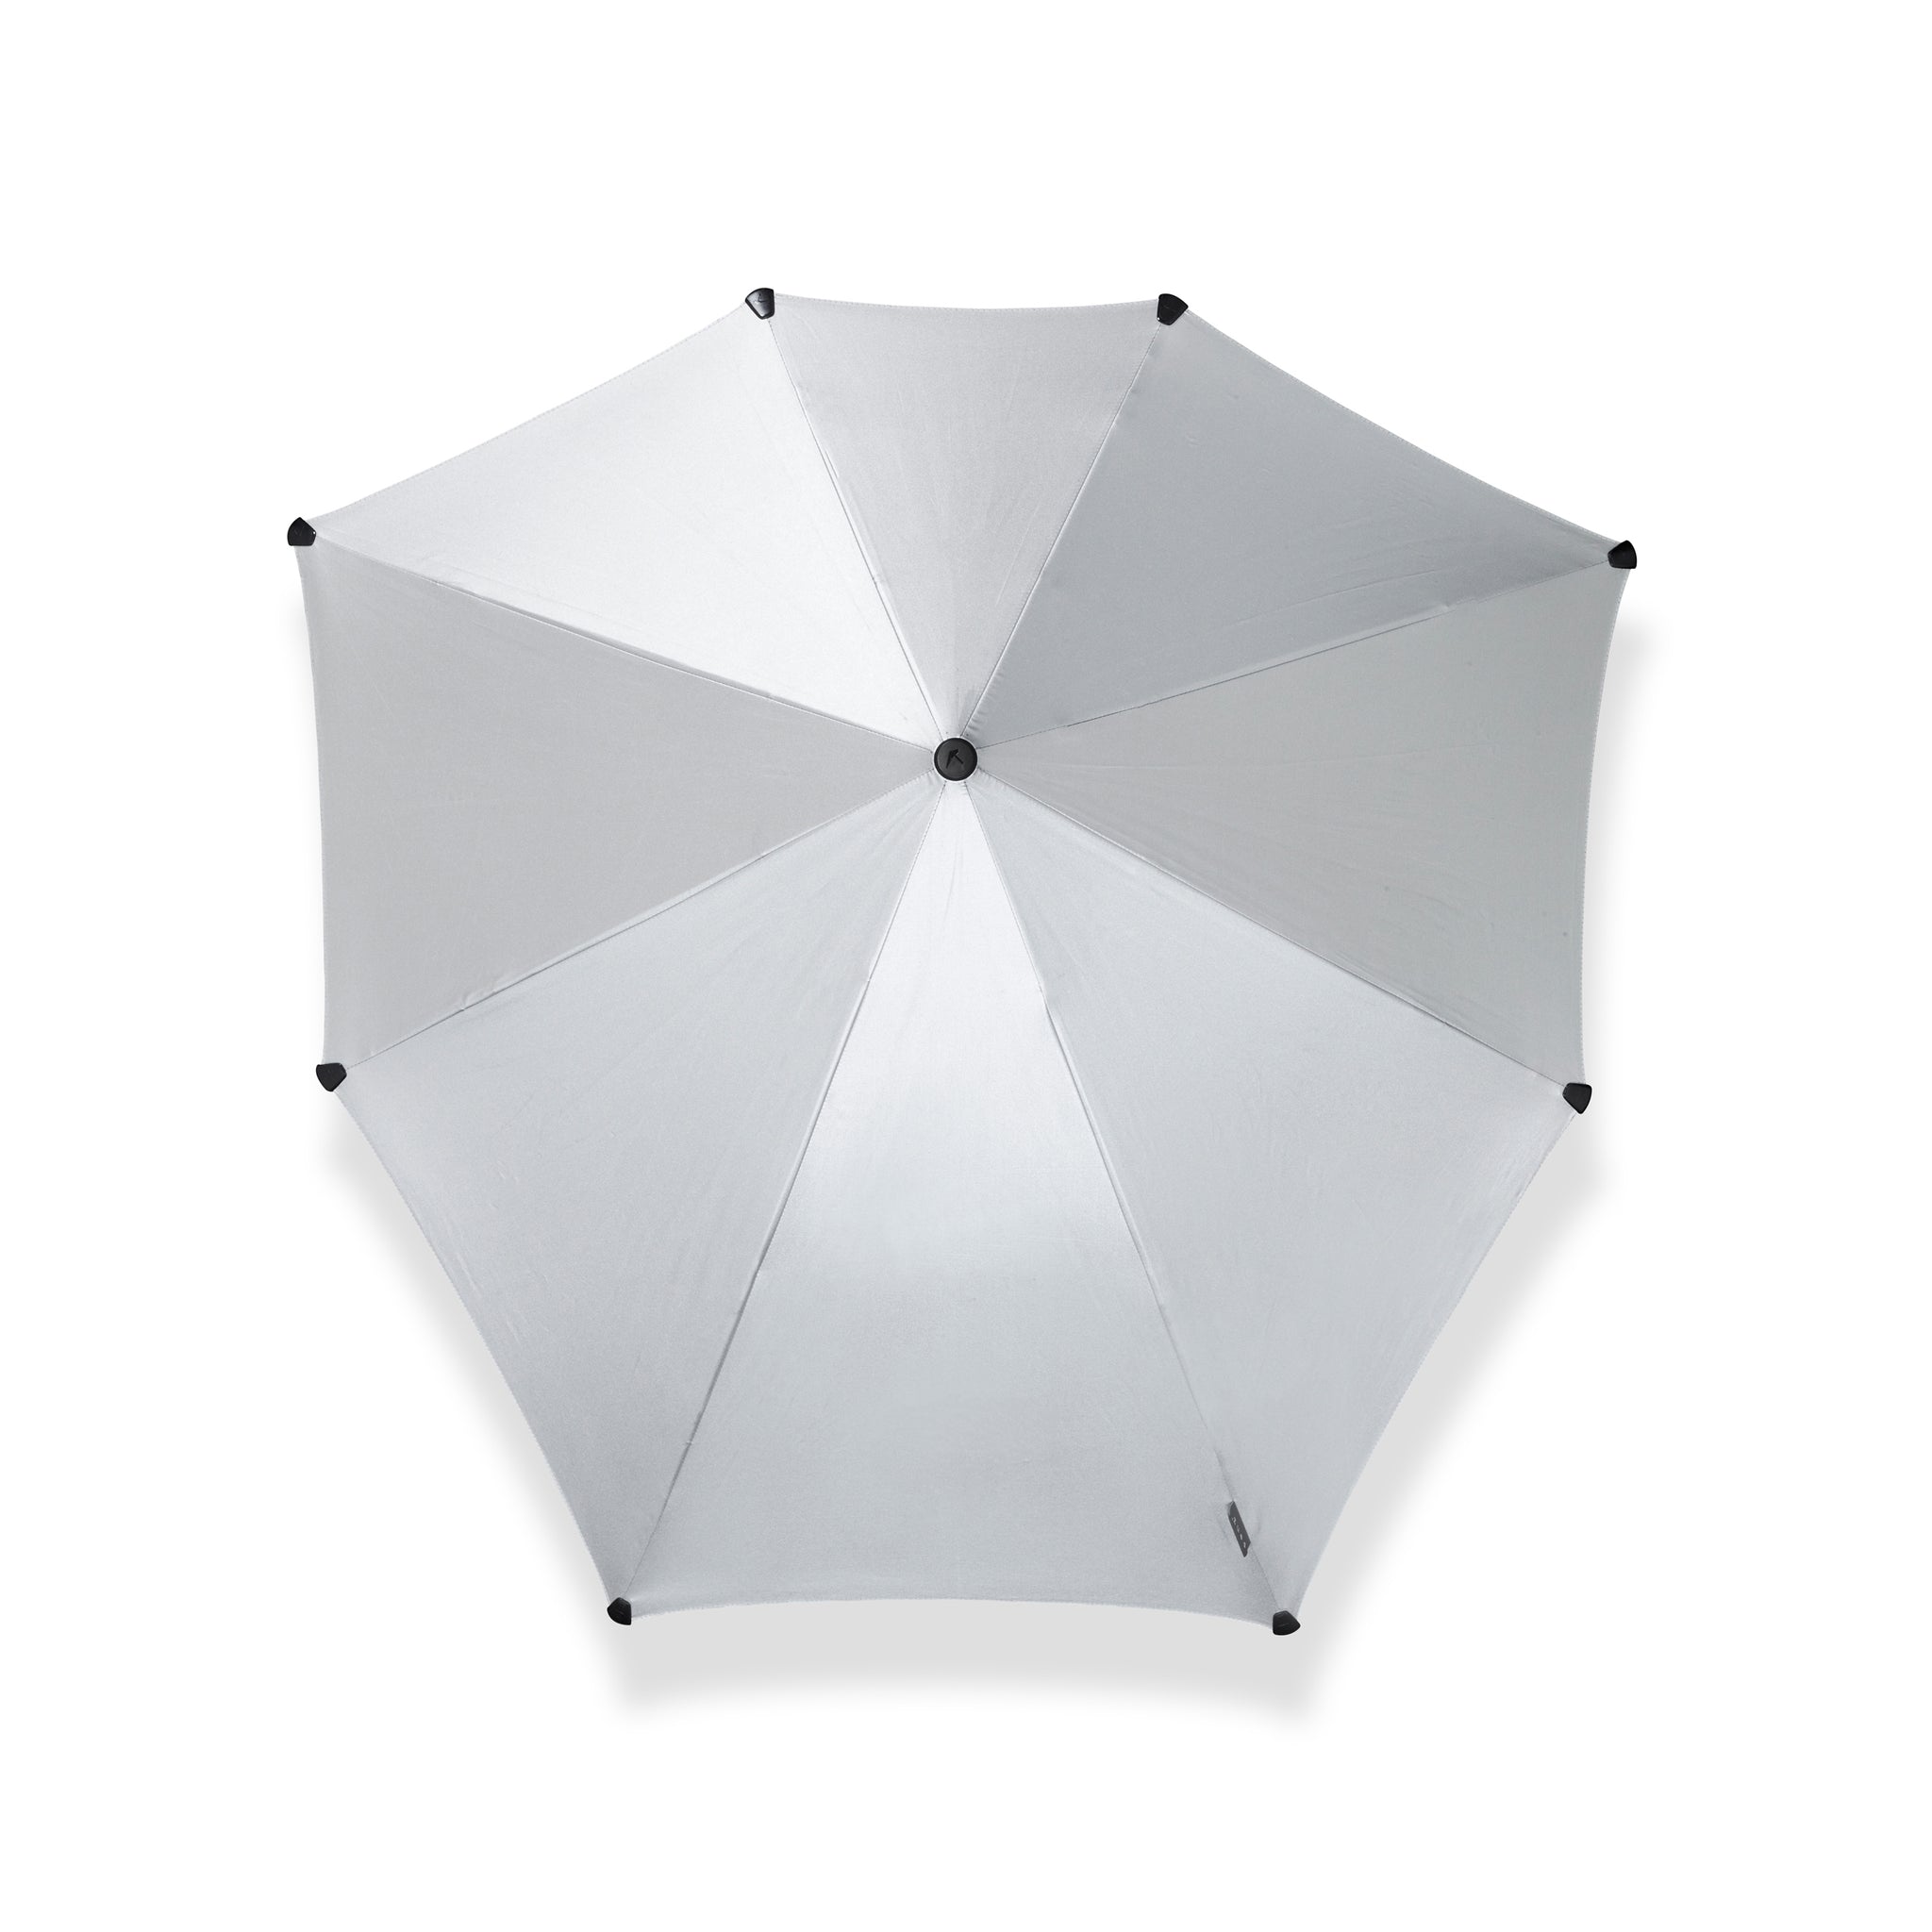 Senz Paraplu Original│Shiny Silver│Storm Paraplu│product foto bovenkant